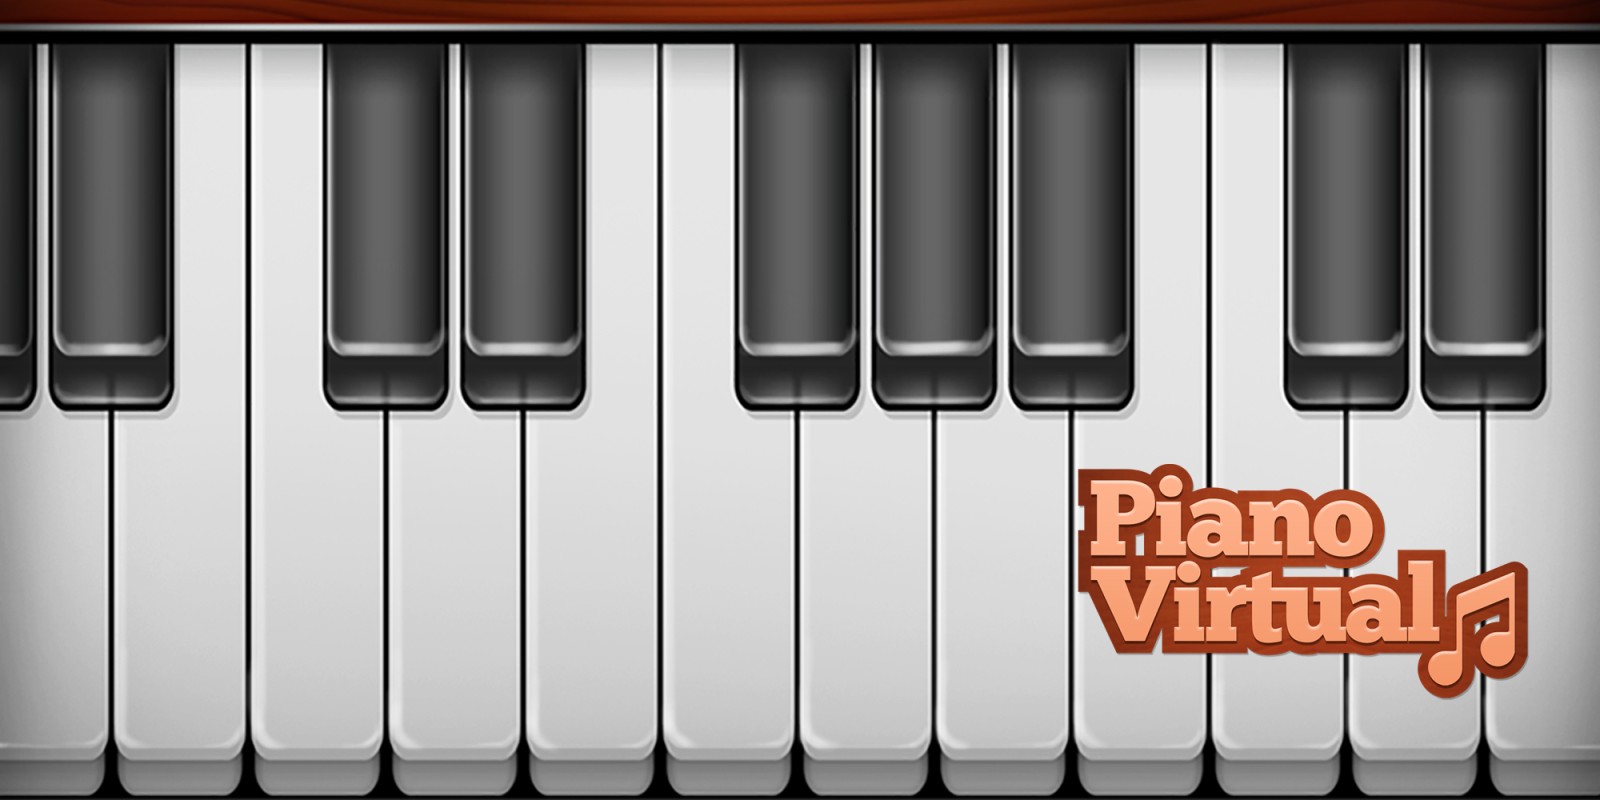 Gracias por tu ayuda Centrar camino Piano Virtual | Programas descargables Nintendo Switch | Juegos | Nintendo